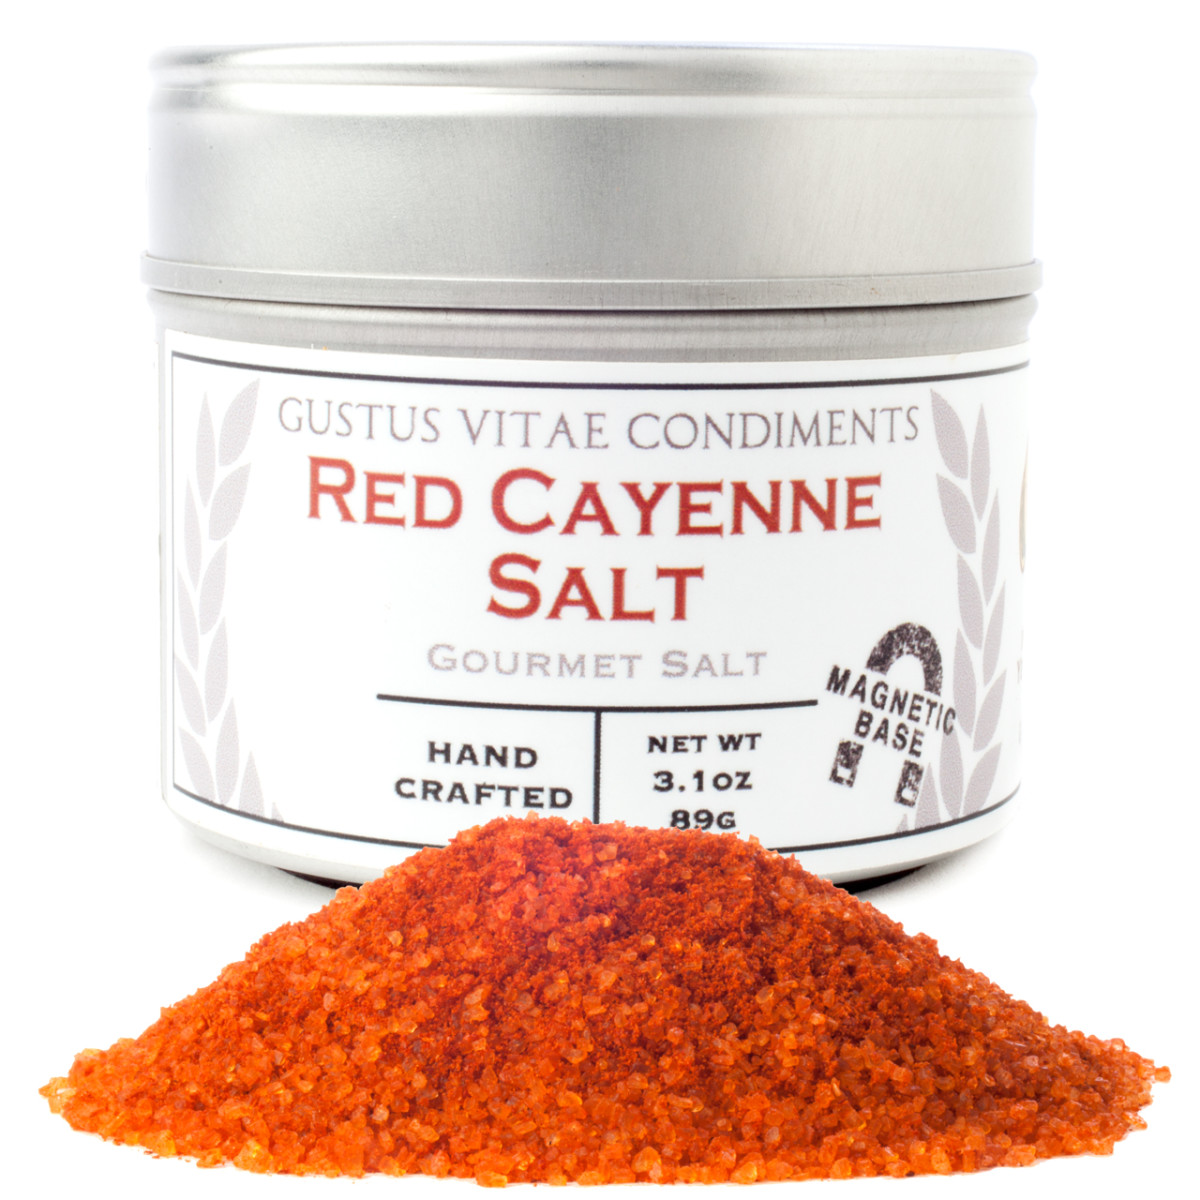 Gustus Vitae Condiments' Red Cayenne Salt